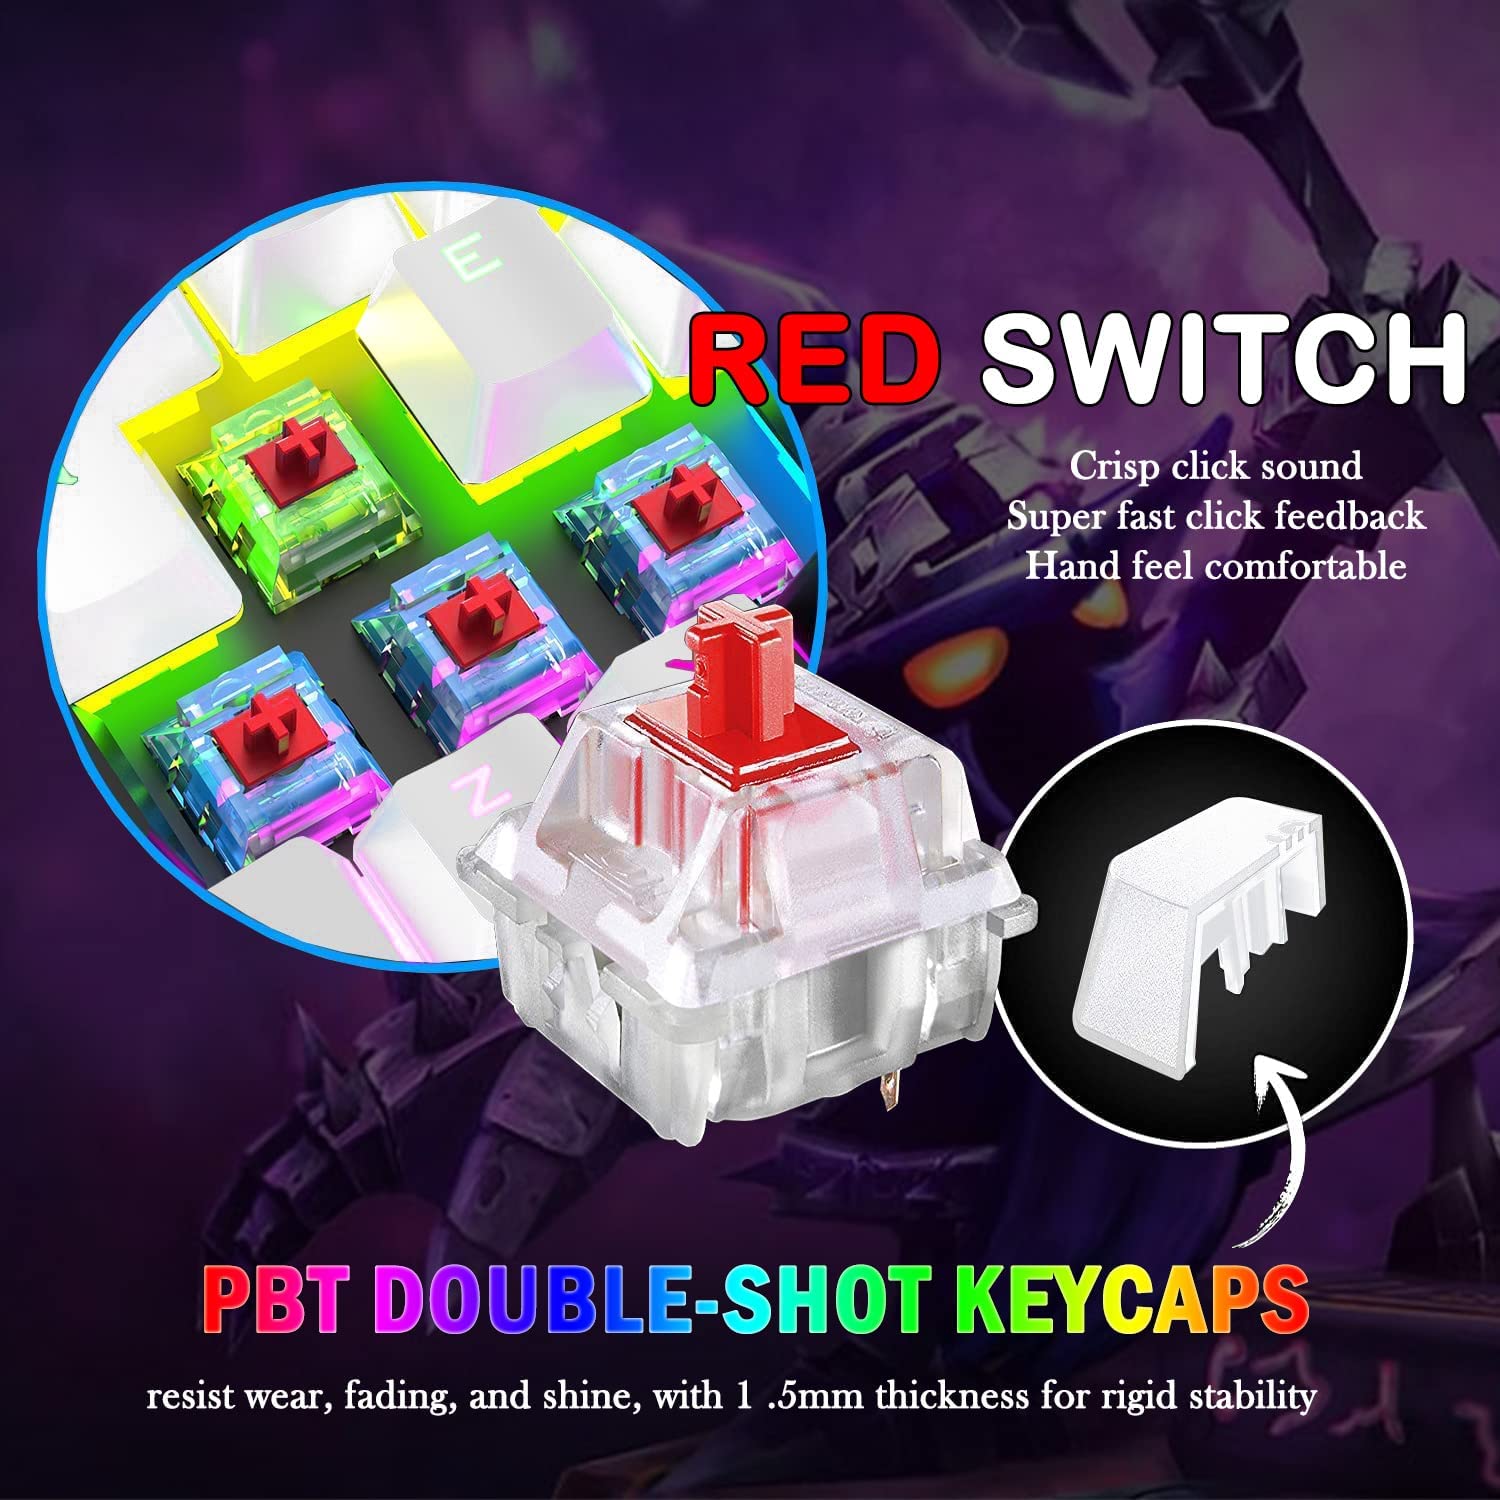 MAGIC-REFINER MK25 PRO UK Layout 60% Mechanical Keyboard, 14 RGB Backlit, Dye-Sublimation Keycap, for PC, White Grey (Red Switch)